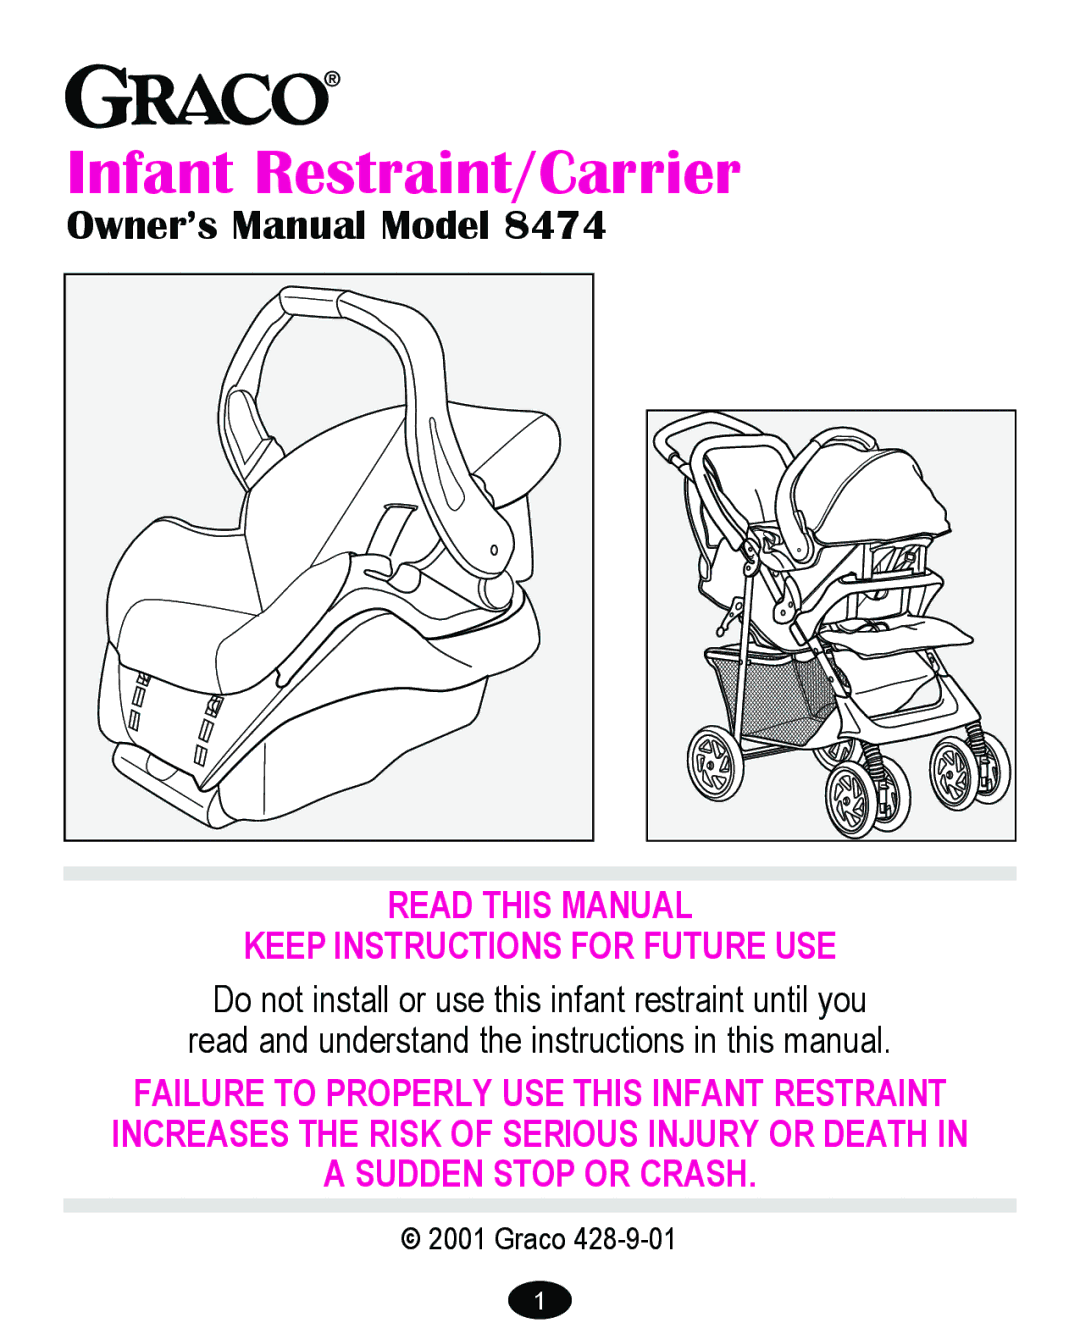 Graco 8474 owner manual Infant Restraint/Carrier 